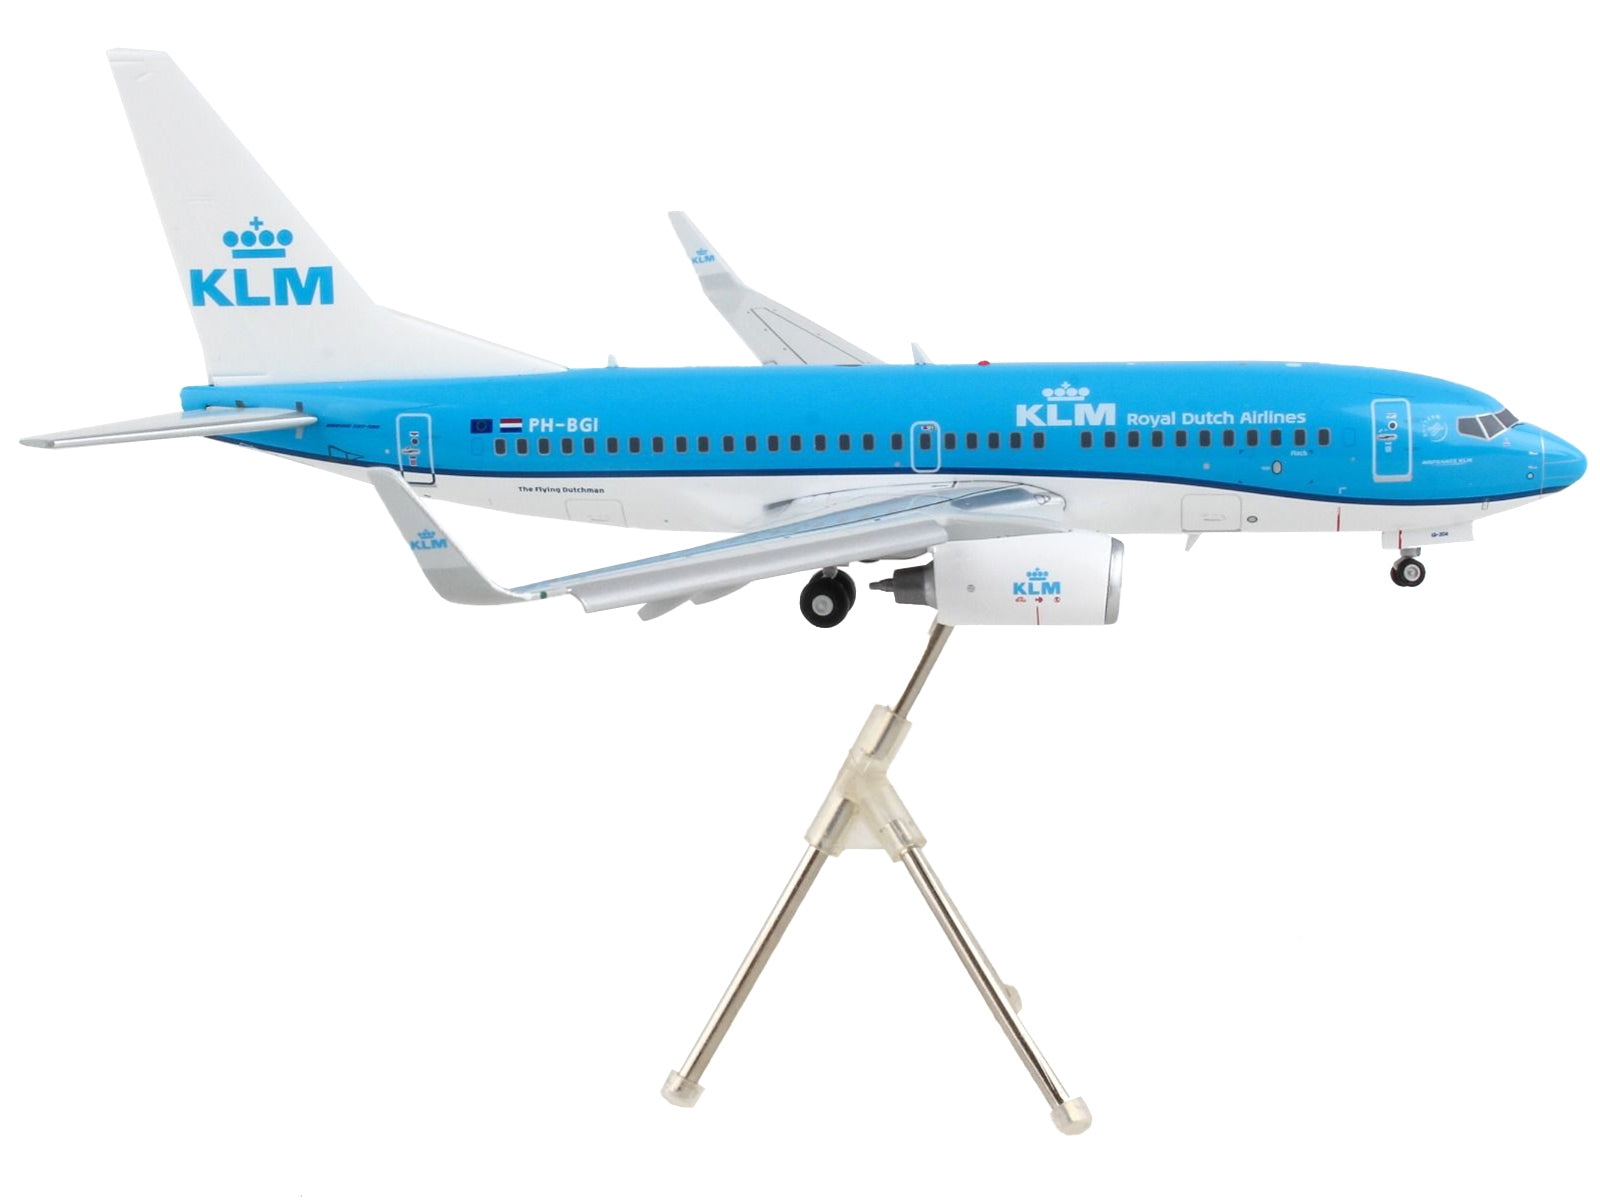 GeminiJets 1/200 Diecast: Boeing 737-700 "KLM Royal Dutch Airlines" Blue/White Tail, Flaps Down, Gemini 200 Series